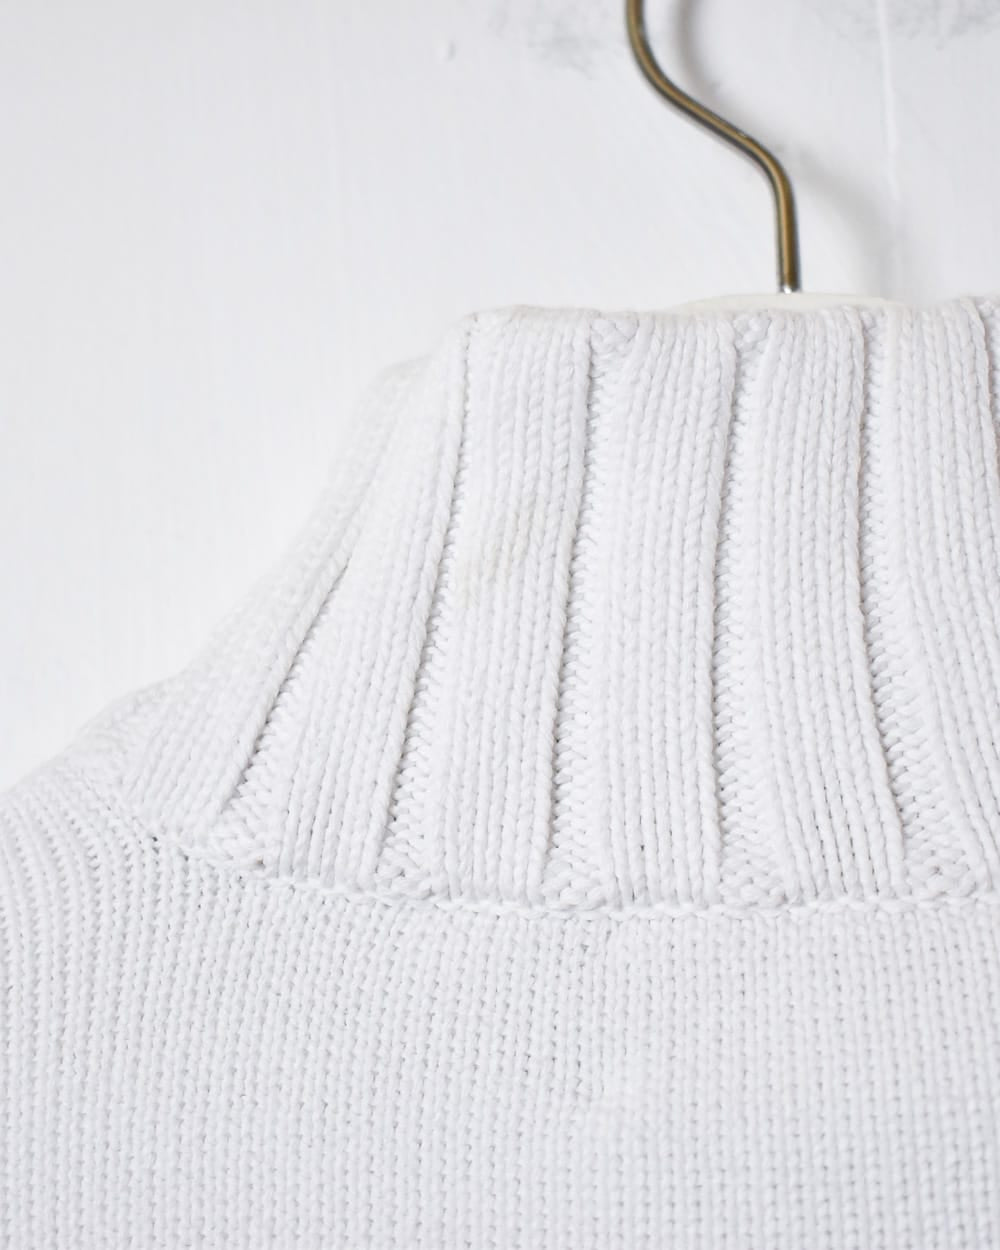 White Polo Sport Knitted 1/4 Zip Sweatshirt - Small